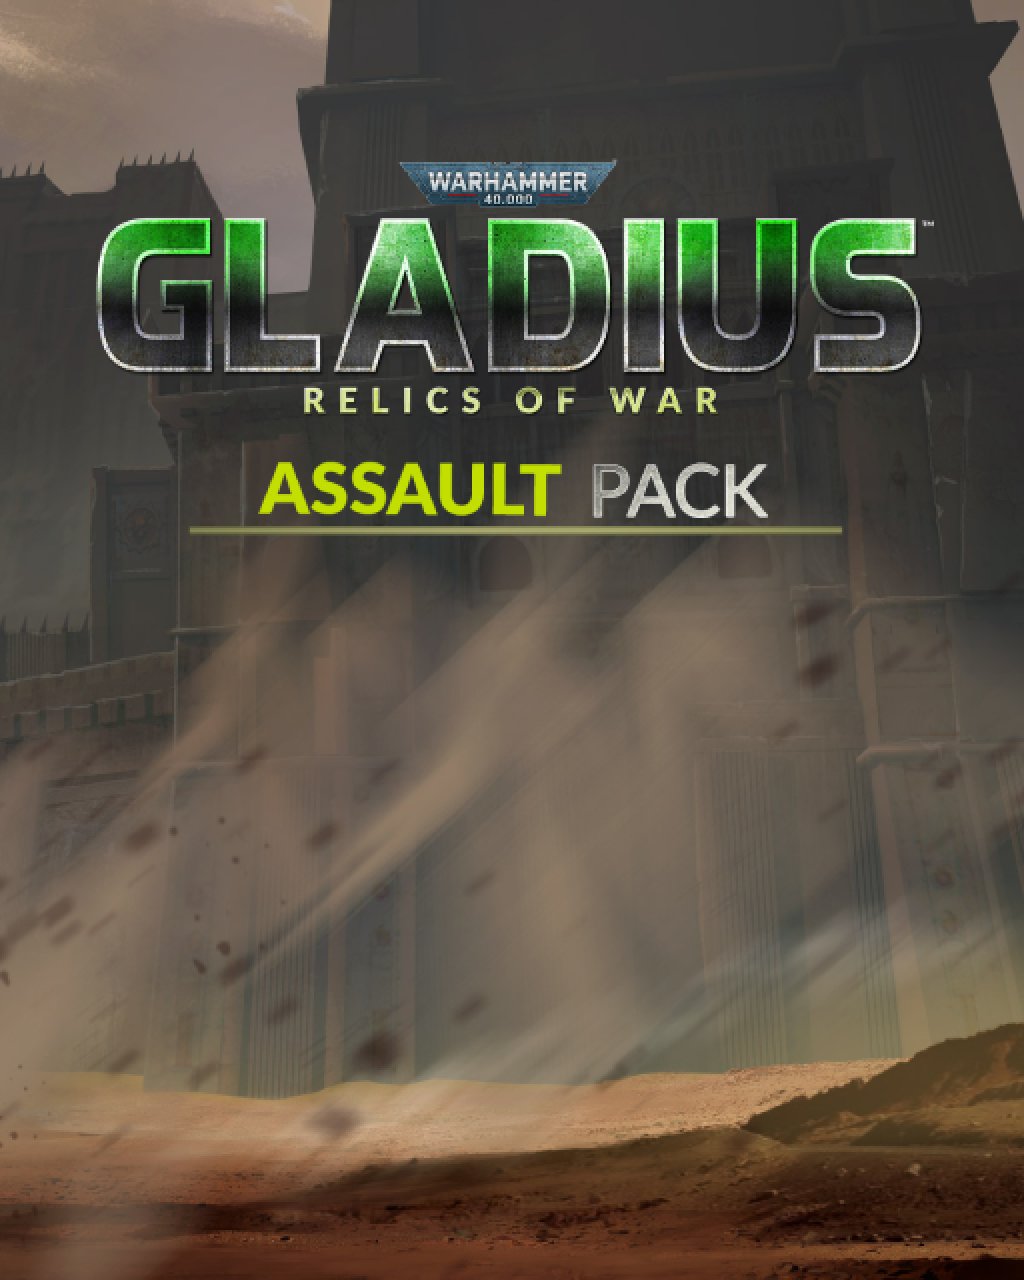 Warhammer 40,000 Gladius Assault Pack